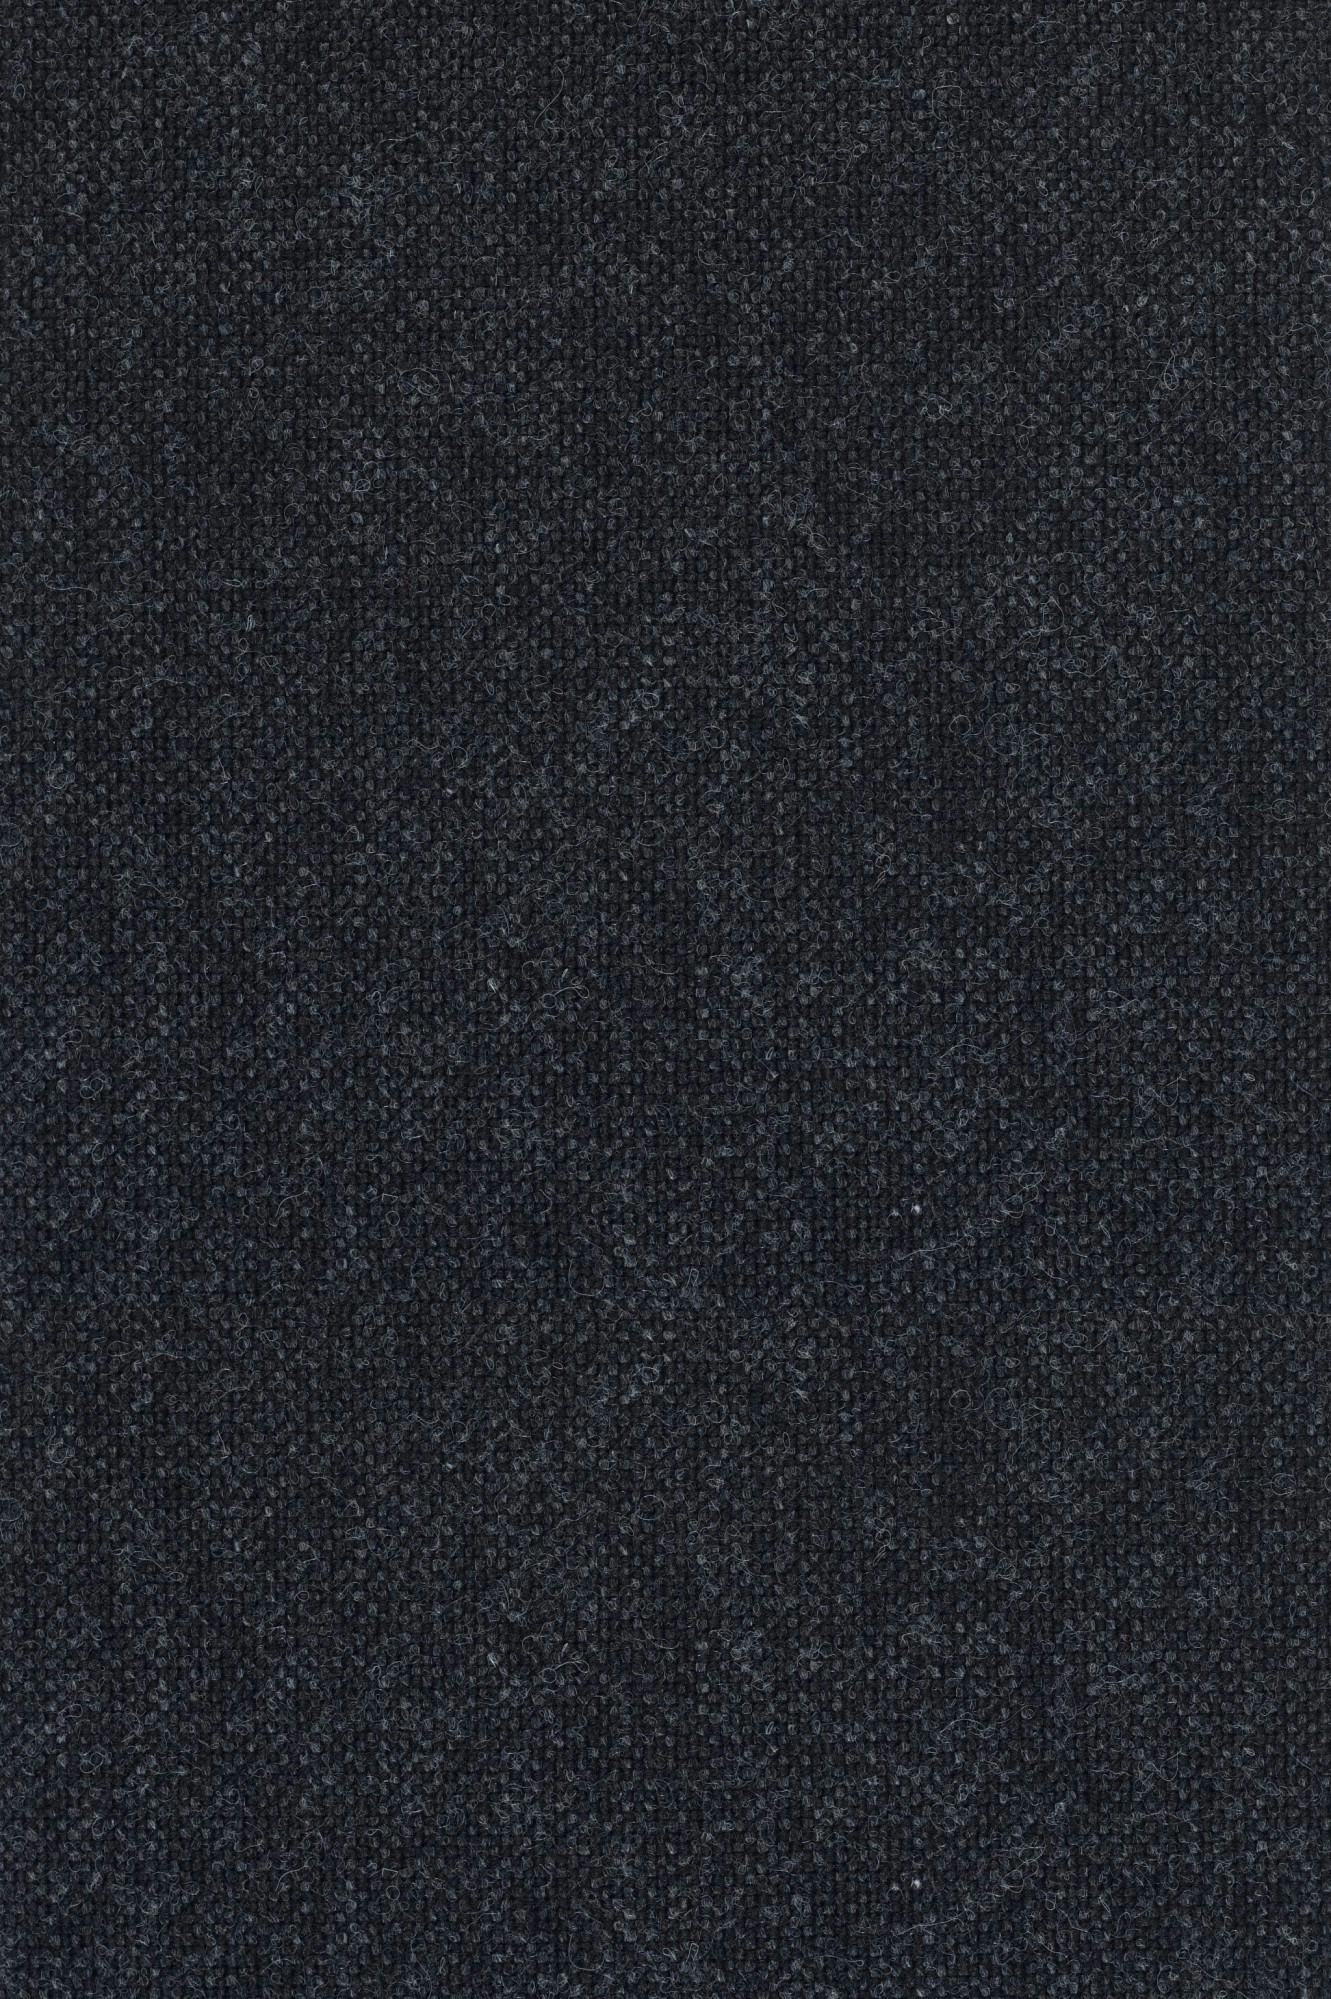 Fabric sample Hallingdal 65 180 grey